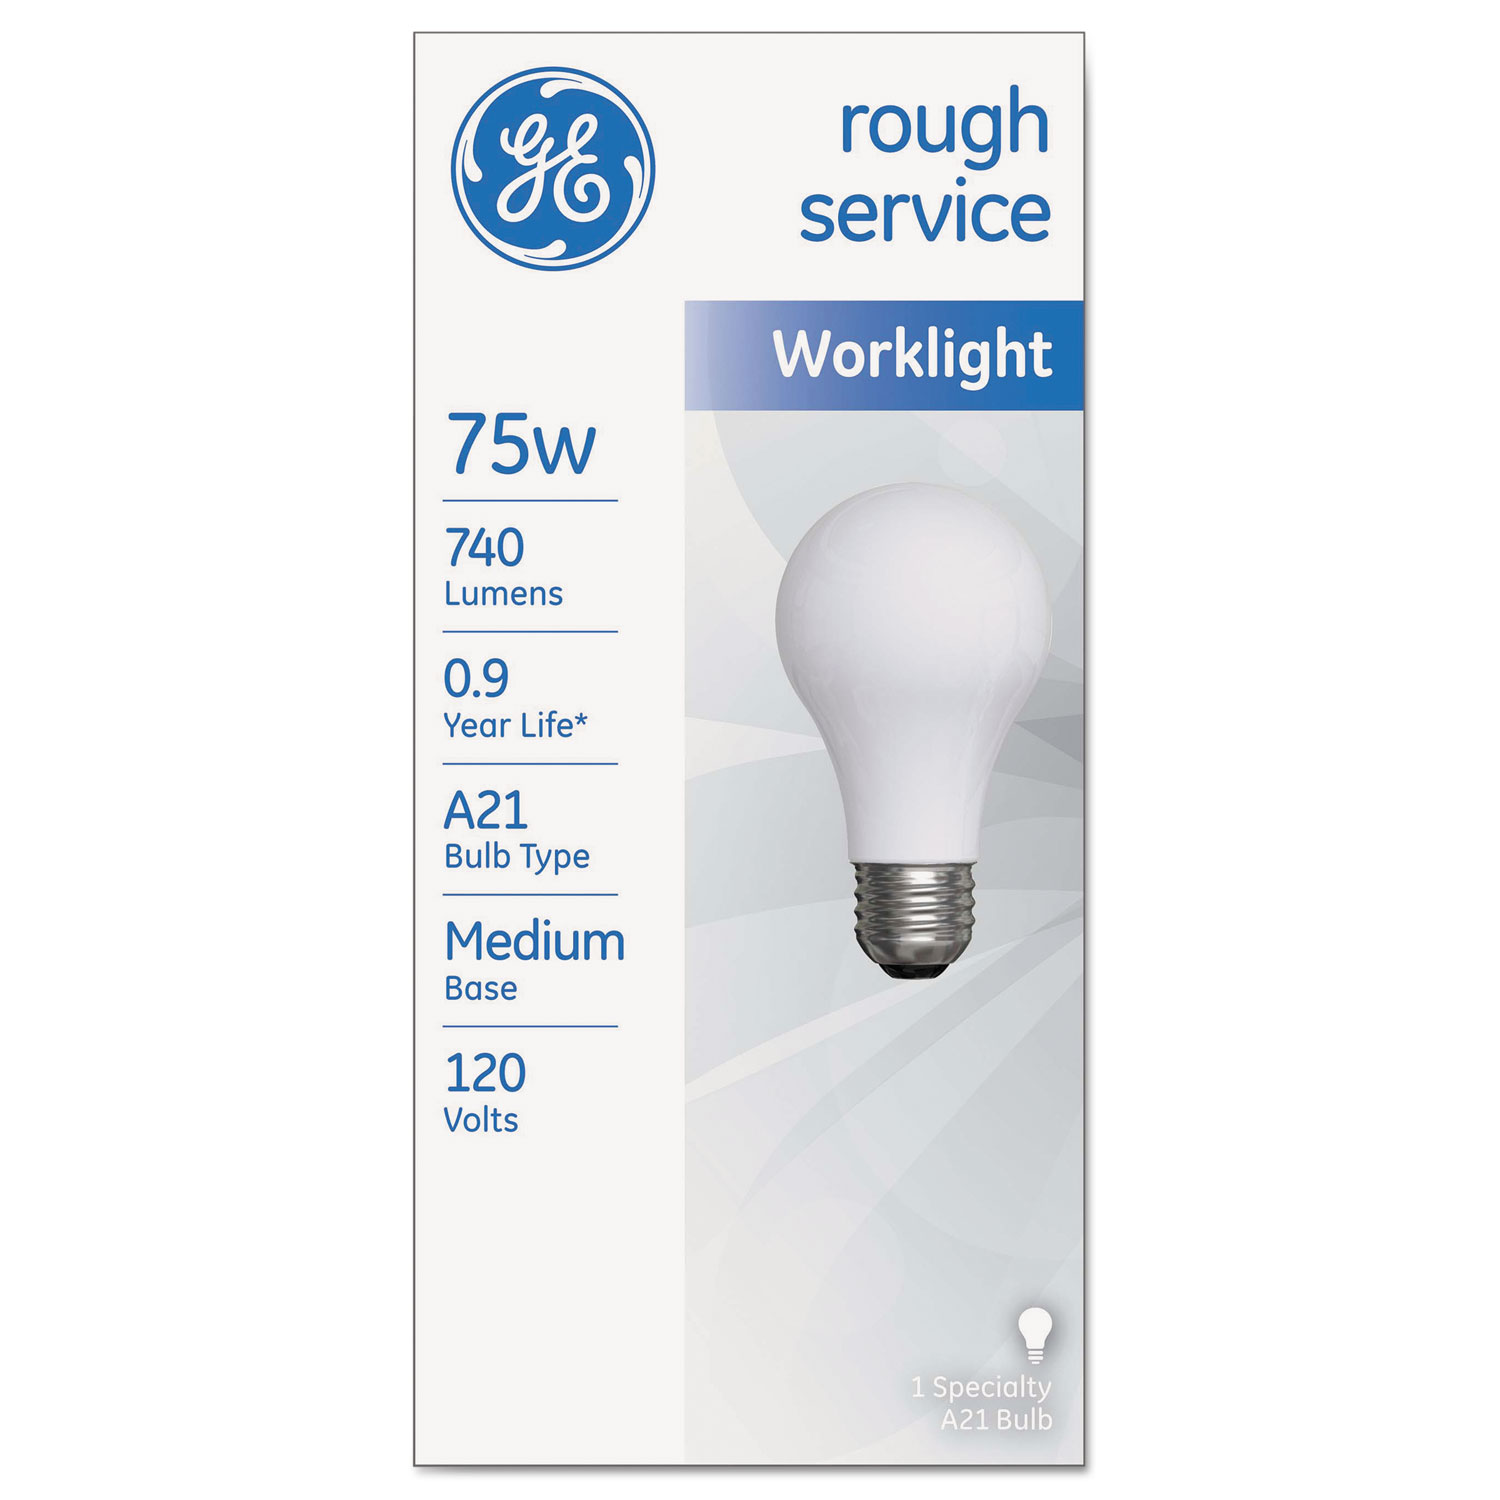  GE GEL18274 Rough Service Incandescent Worklight Bulb, A21, 75 W, 750 lm (GEL18274) 